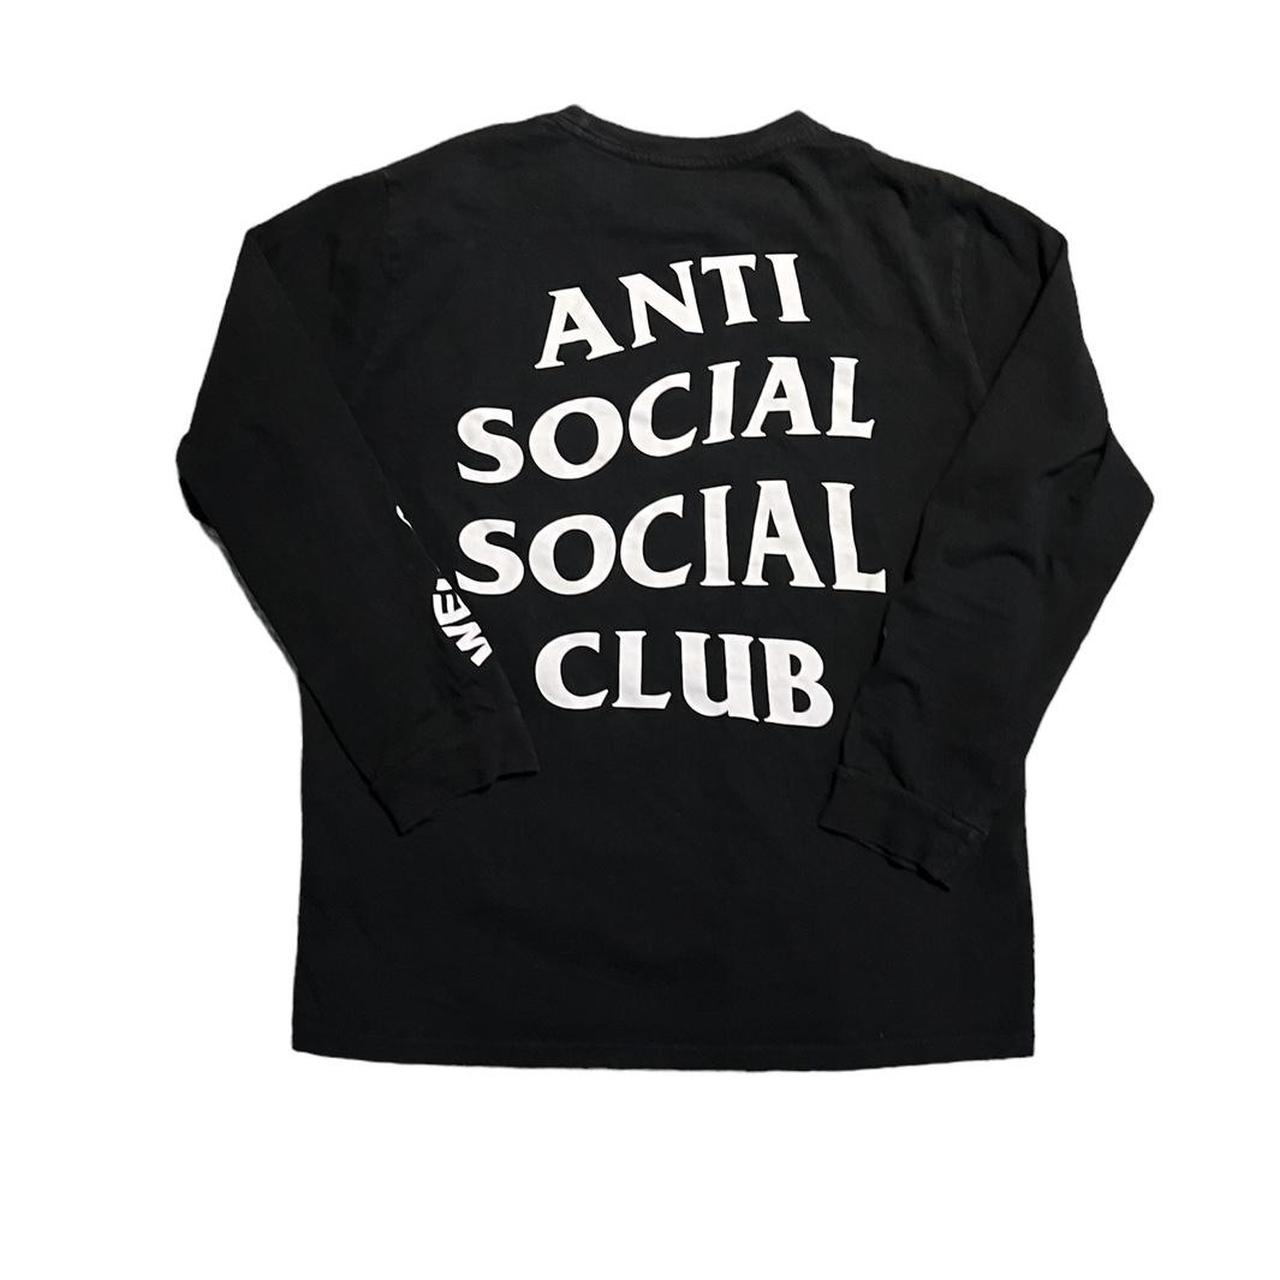 Anti Social Social Club Men's Black and White T-shirt (4)